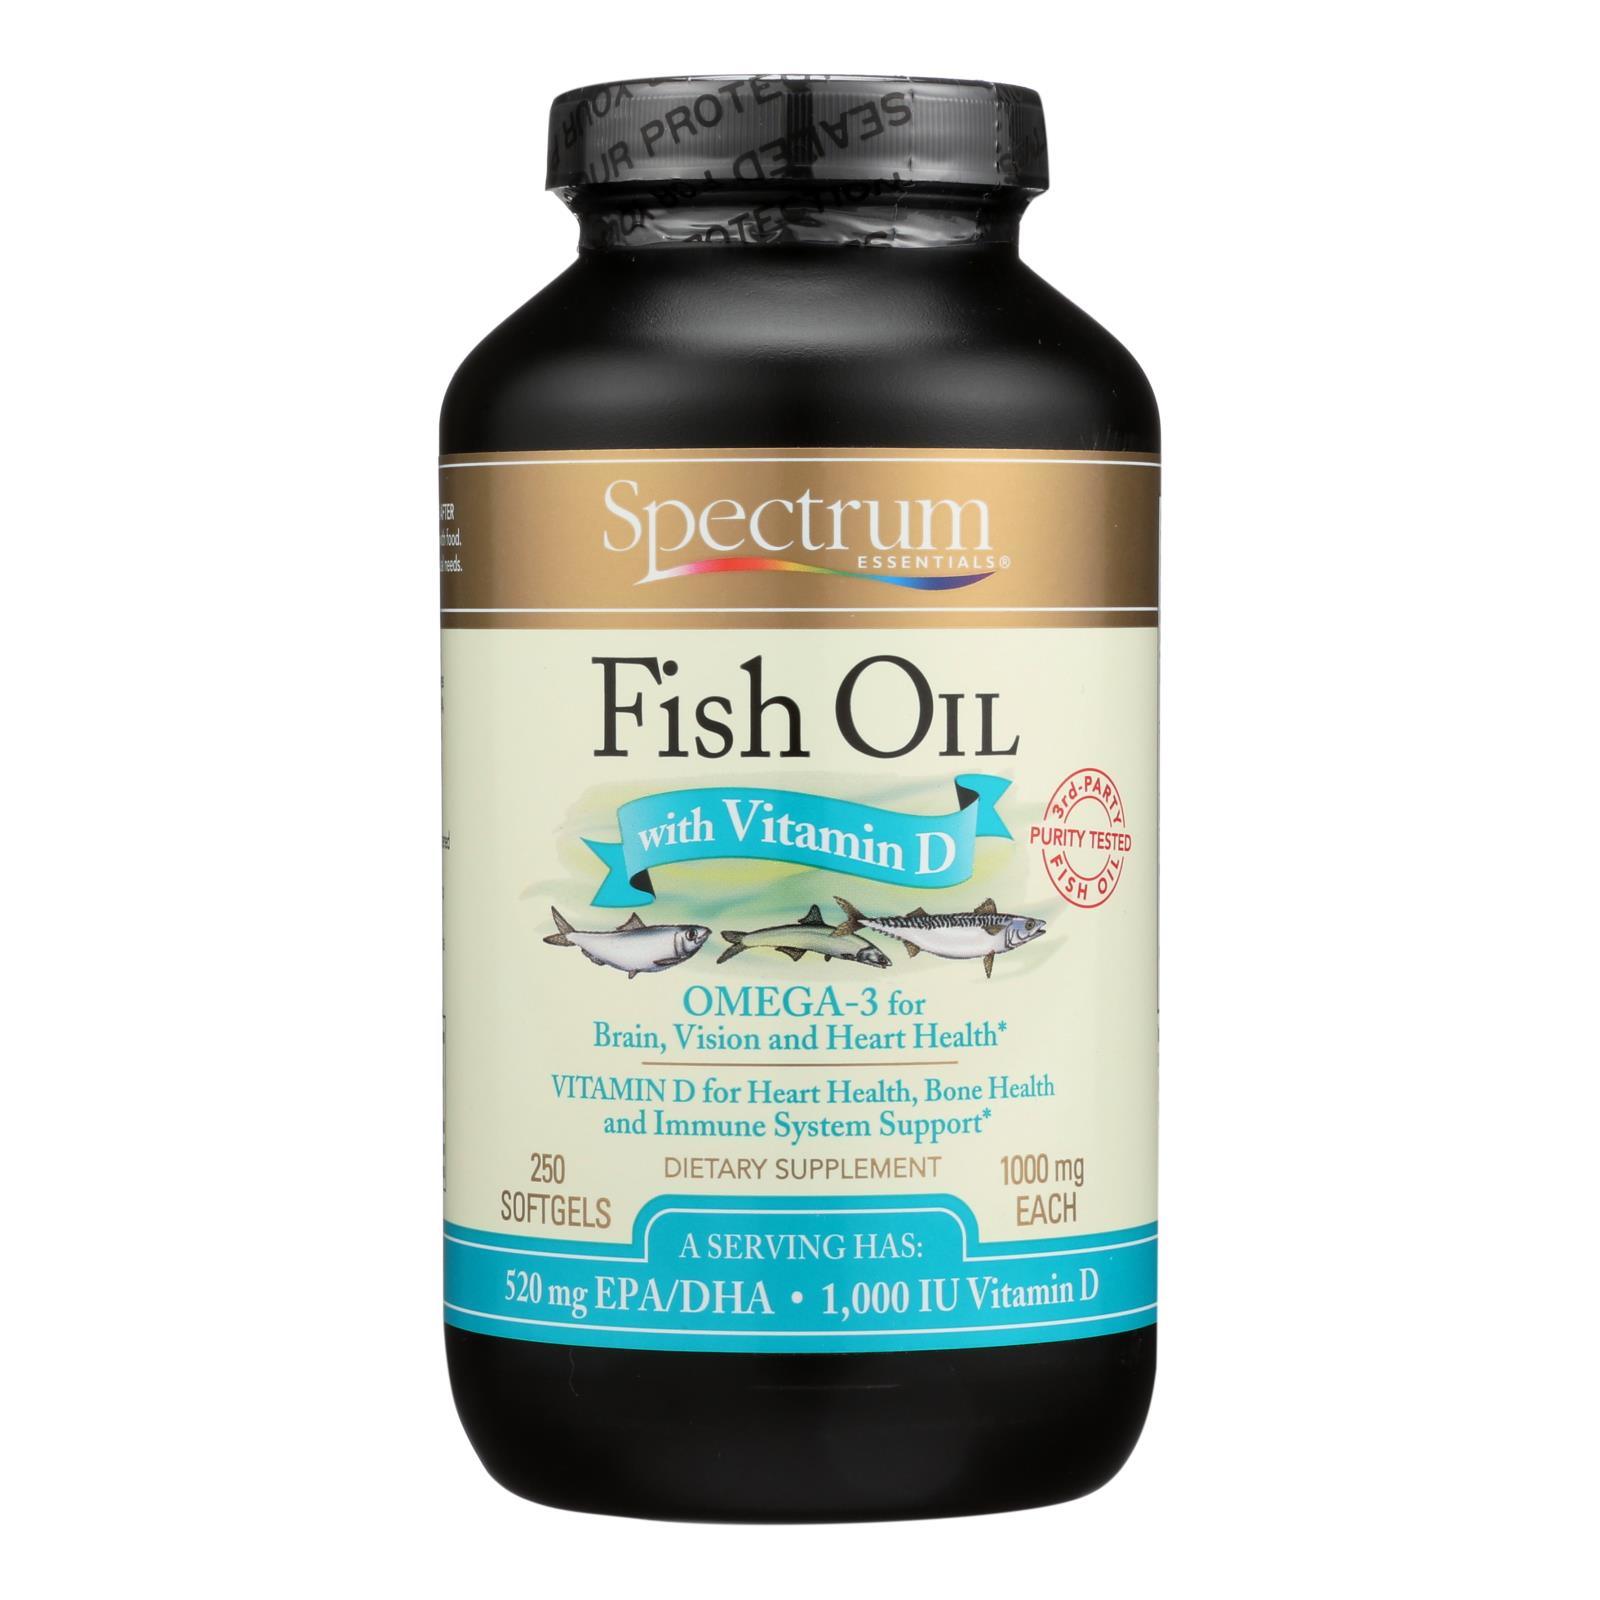 Spectrum Essentials Omega-3 Fish Oil with Vitamin D - 250 Softgels